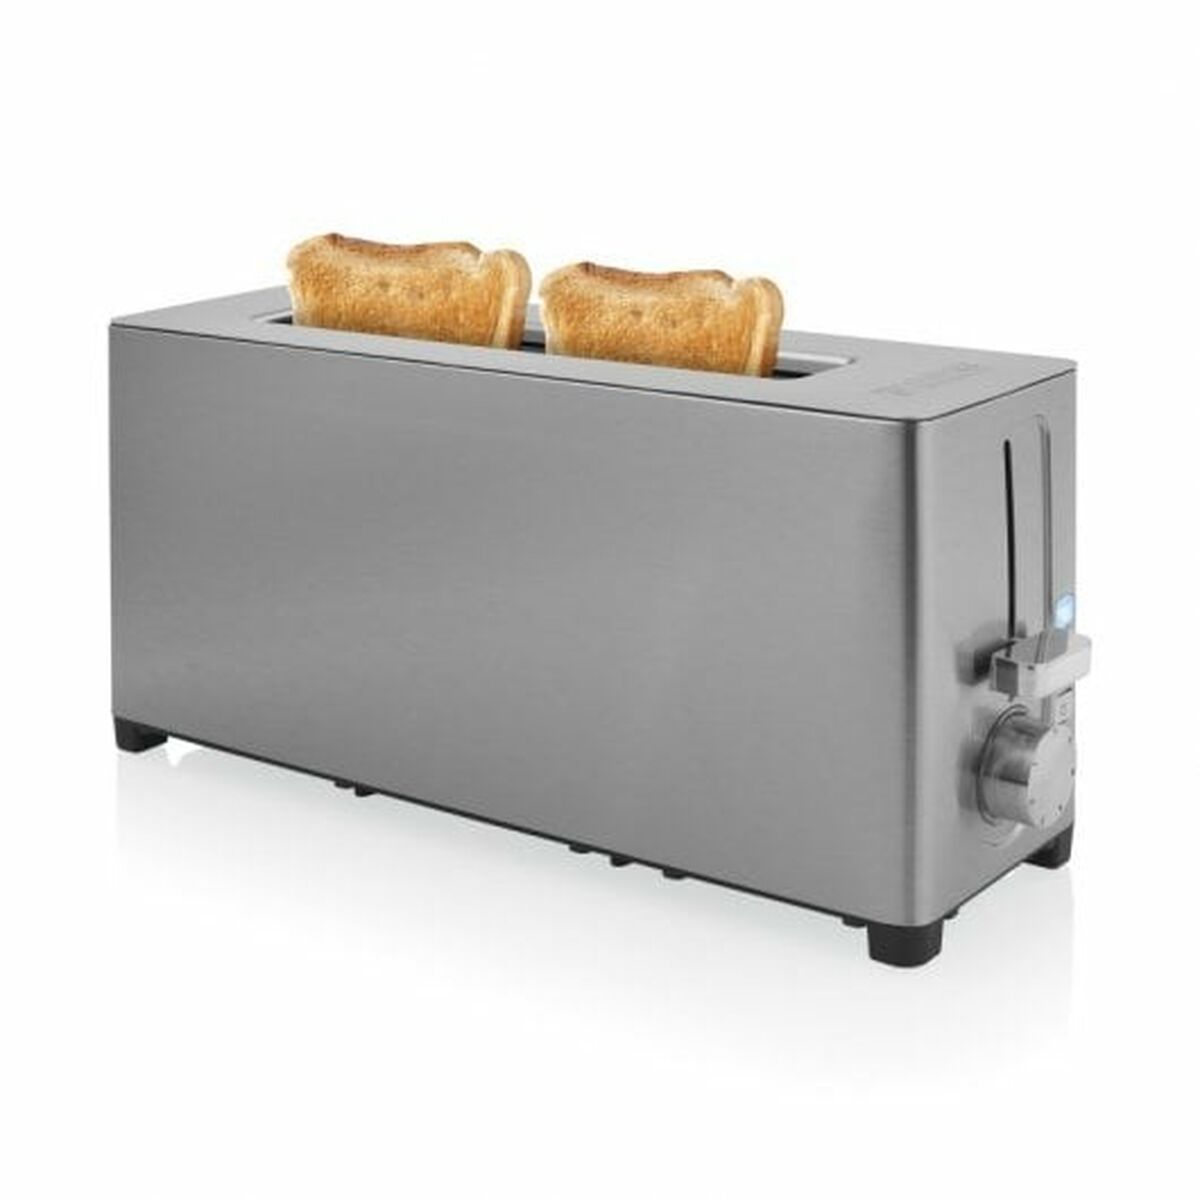 Toaster Princess 01.142401.01.001 1050 W Edelstahl